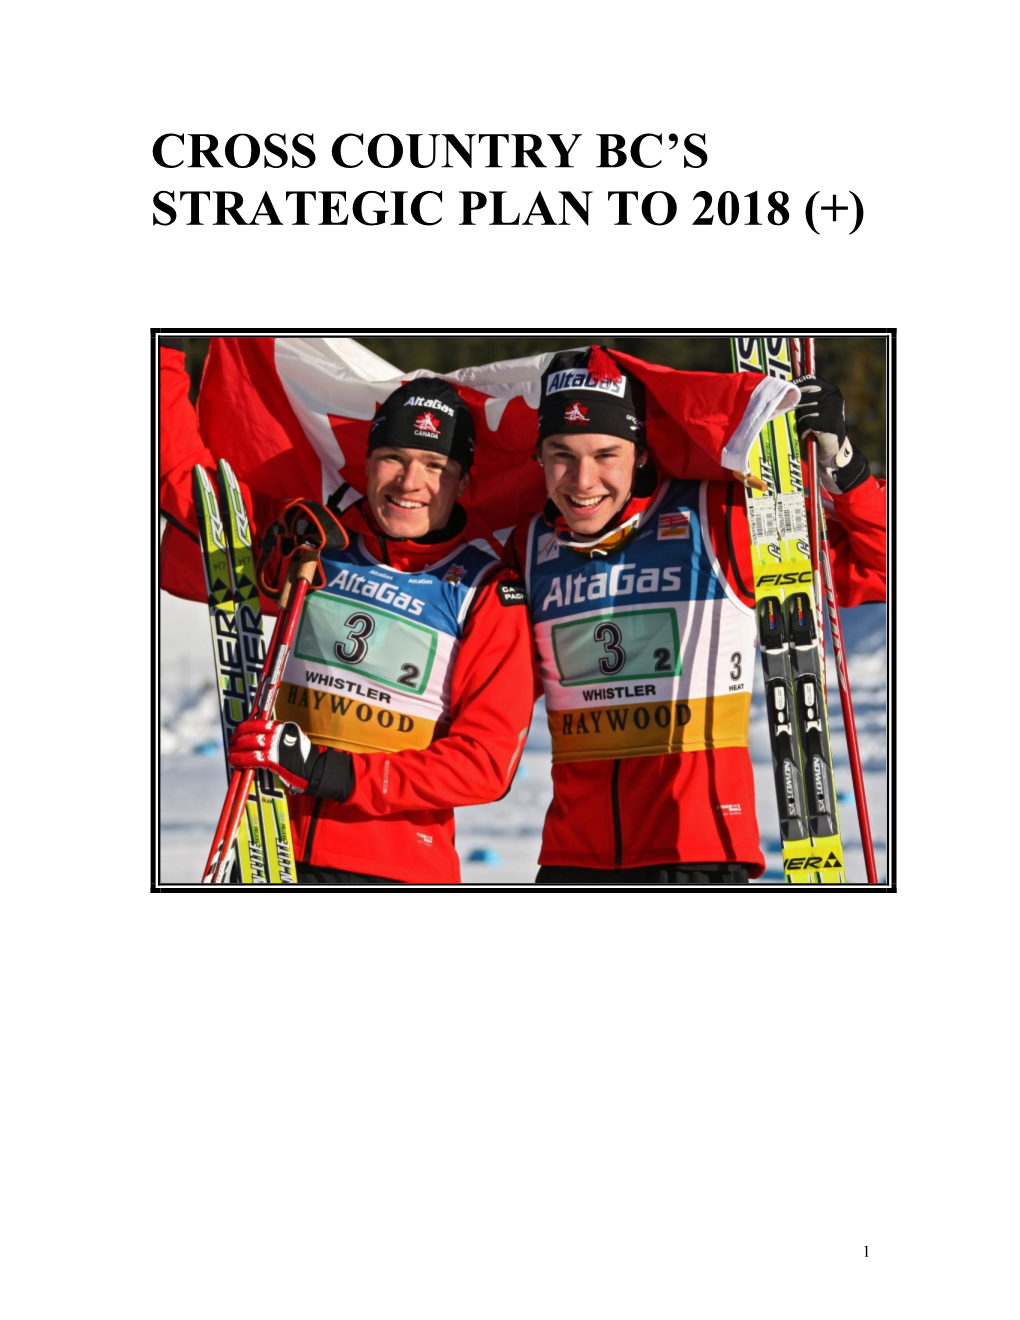 Strategic Plan to 2018 (+)